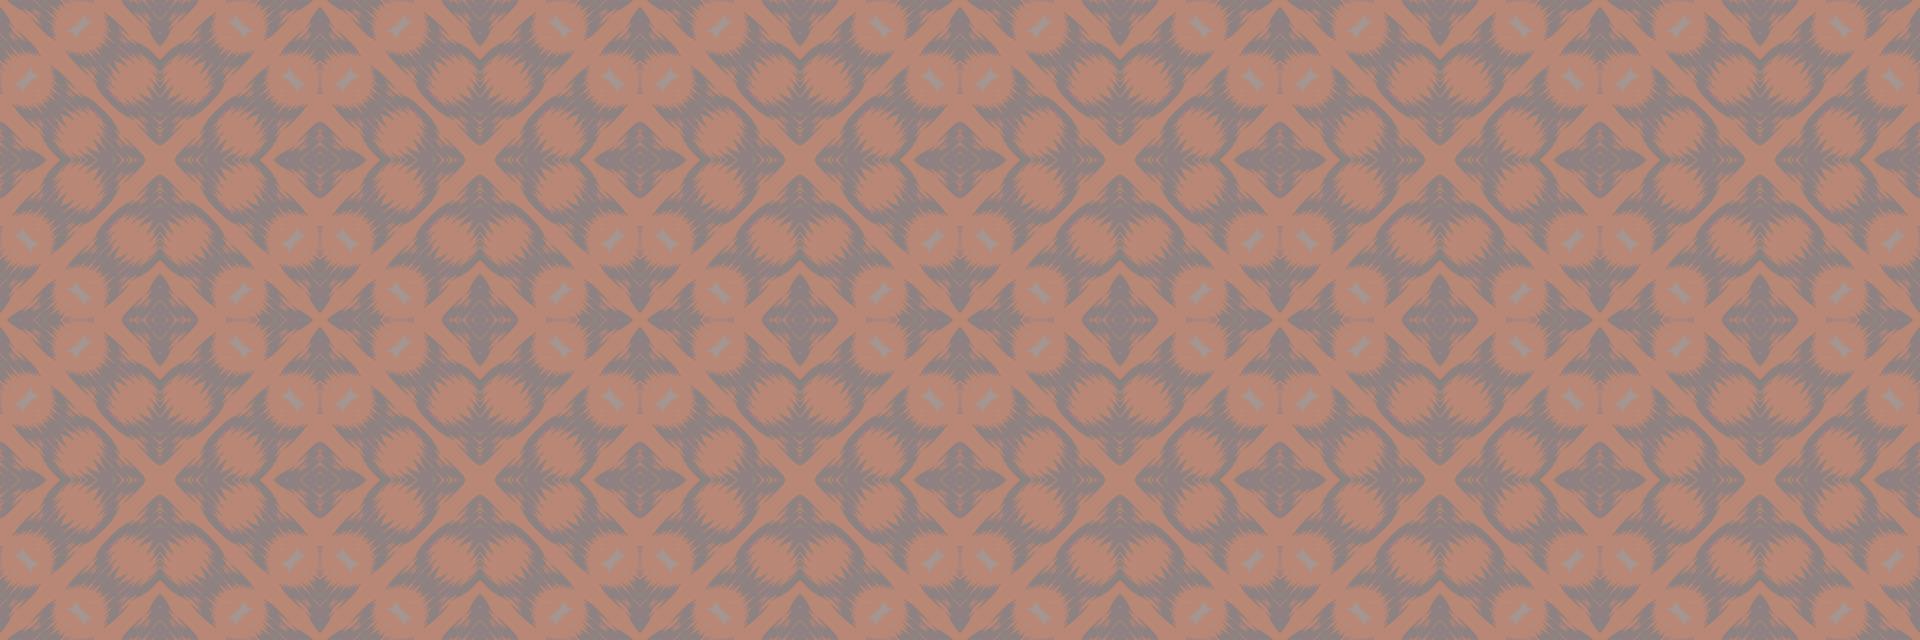 Batik Textile Ethnic ikat chevron seamless pattern digital vector design for Print saree Kurti Borneo Fabric border brush symbols swatches cotton